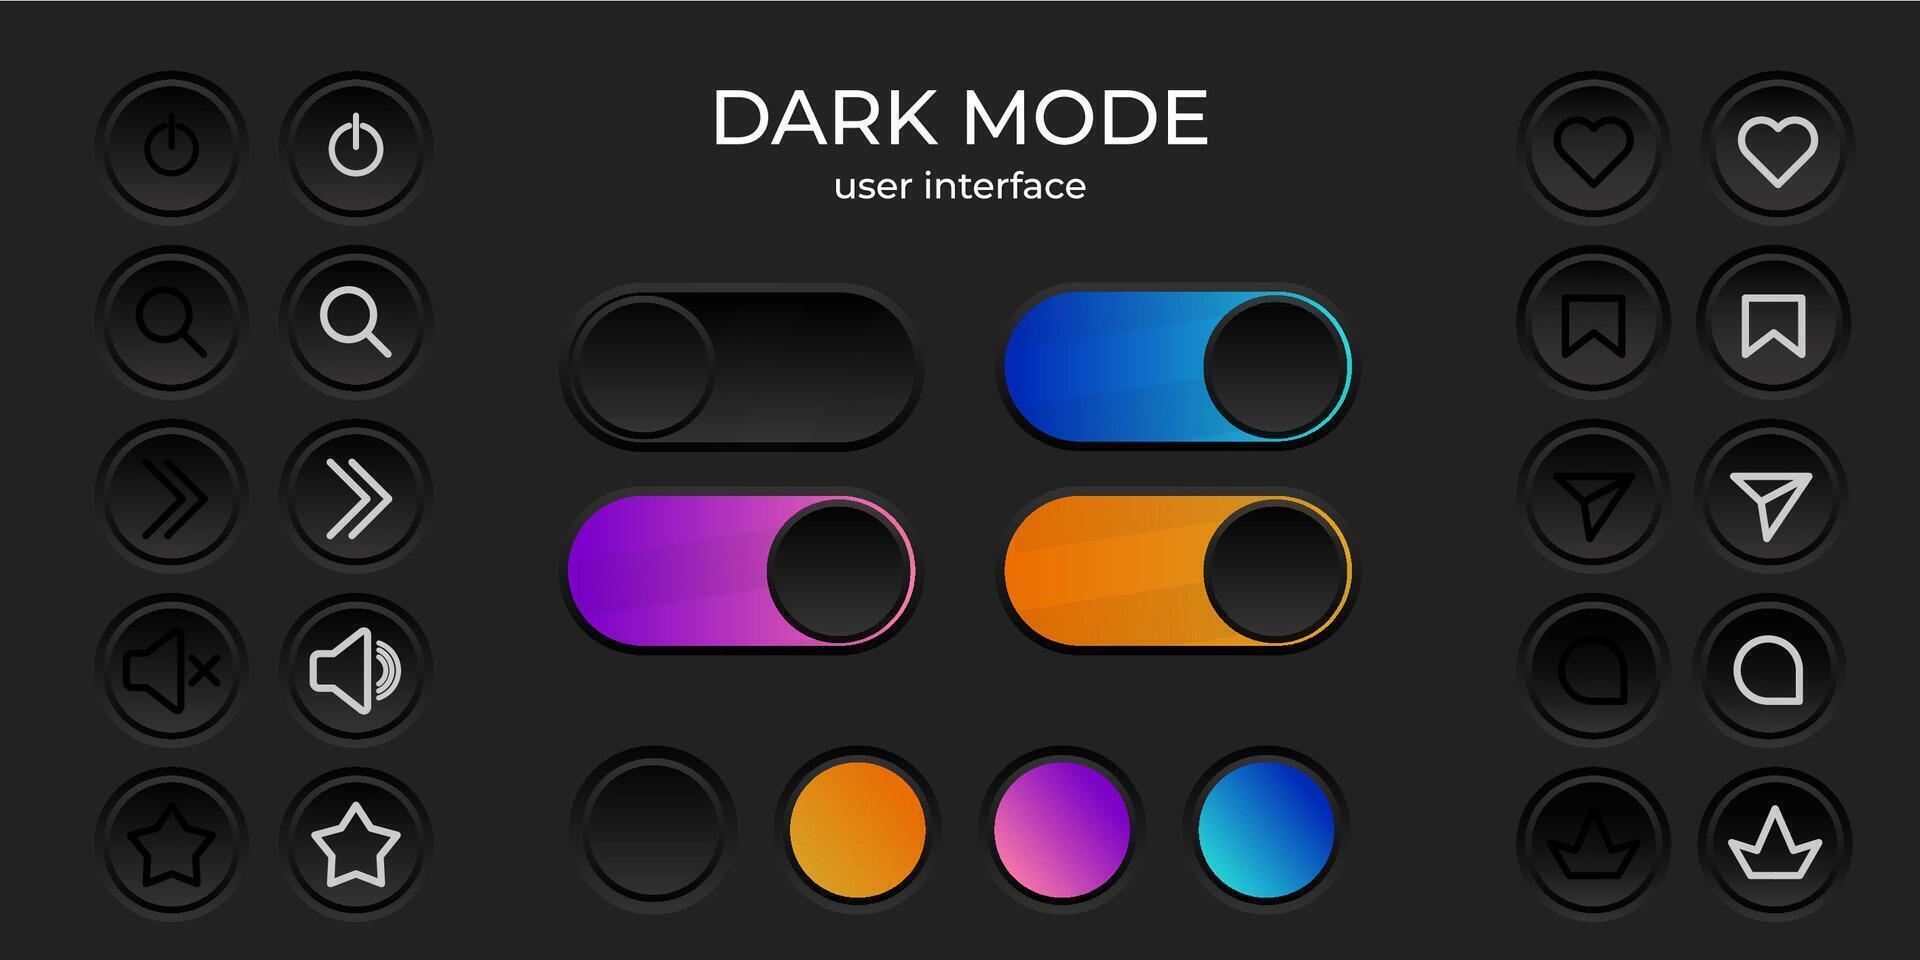 Dark mode ui simple elegant minimalist set of buttons, loading bar design. Black interface elements. Vector illustration